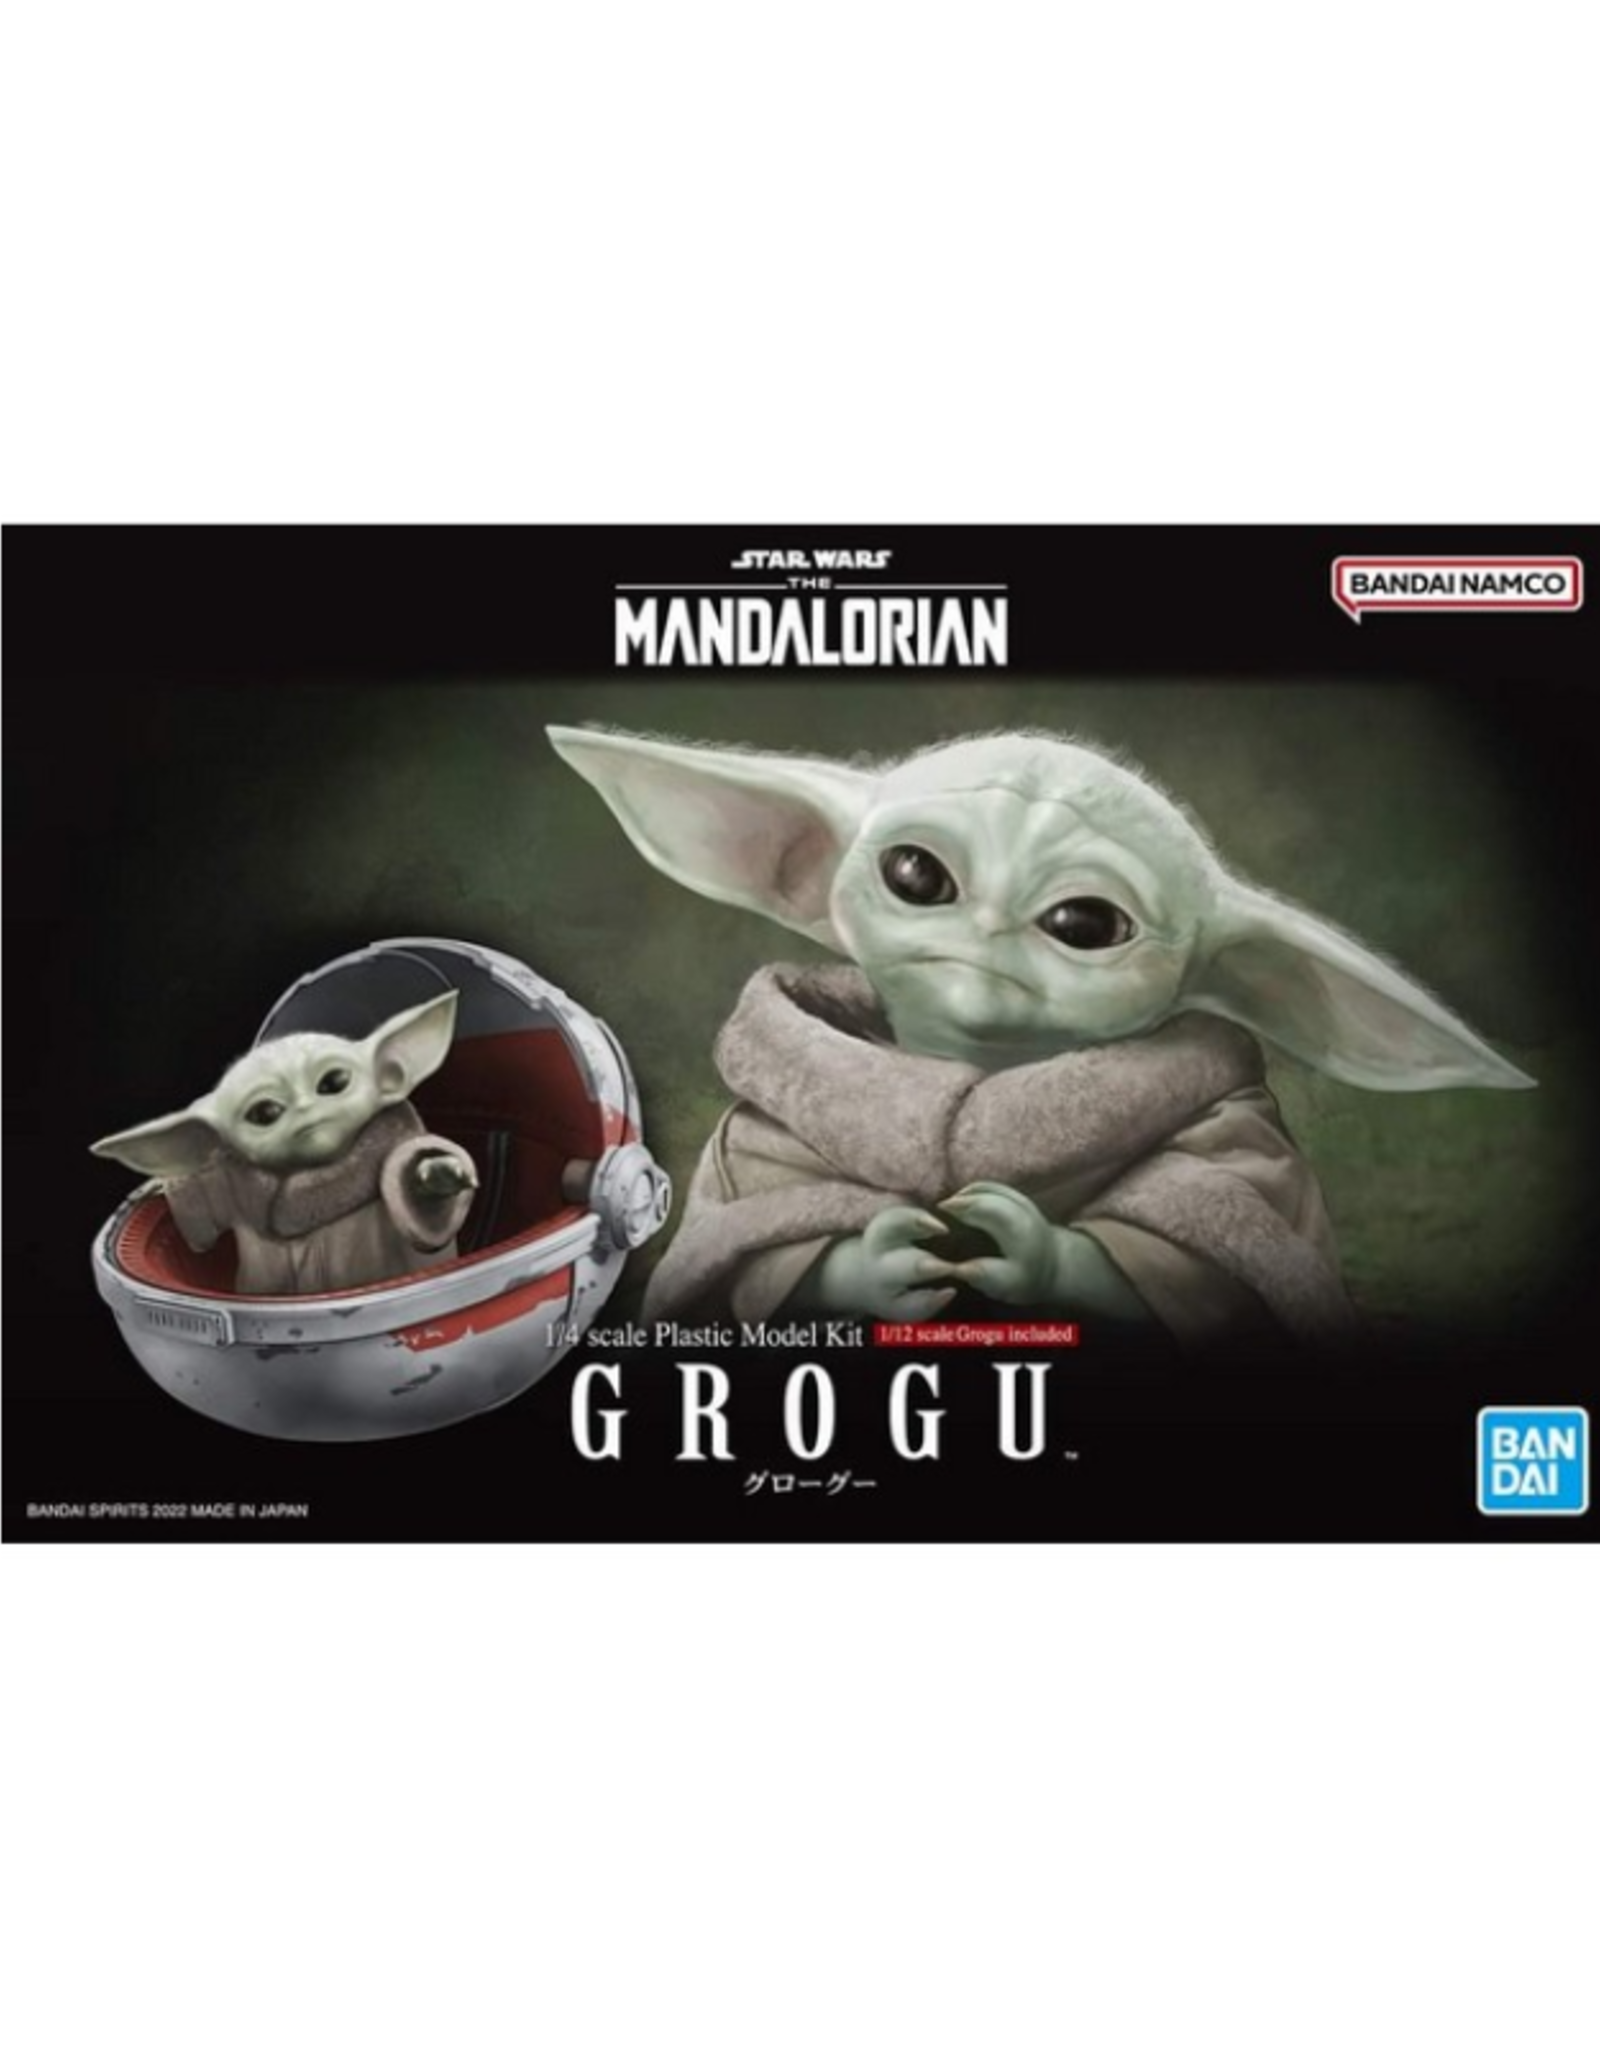 Star Wars: The Mandalorian - Grogu